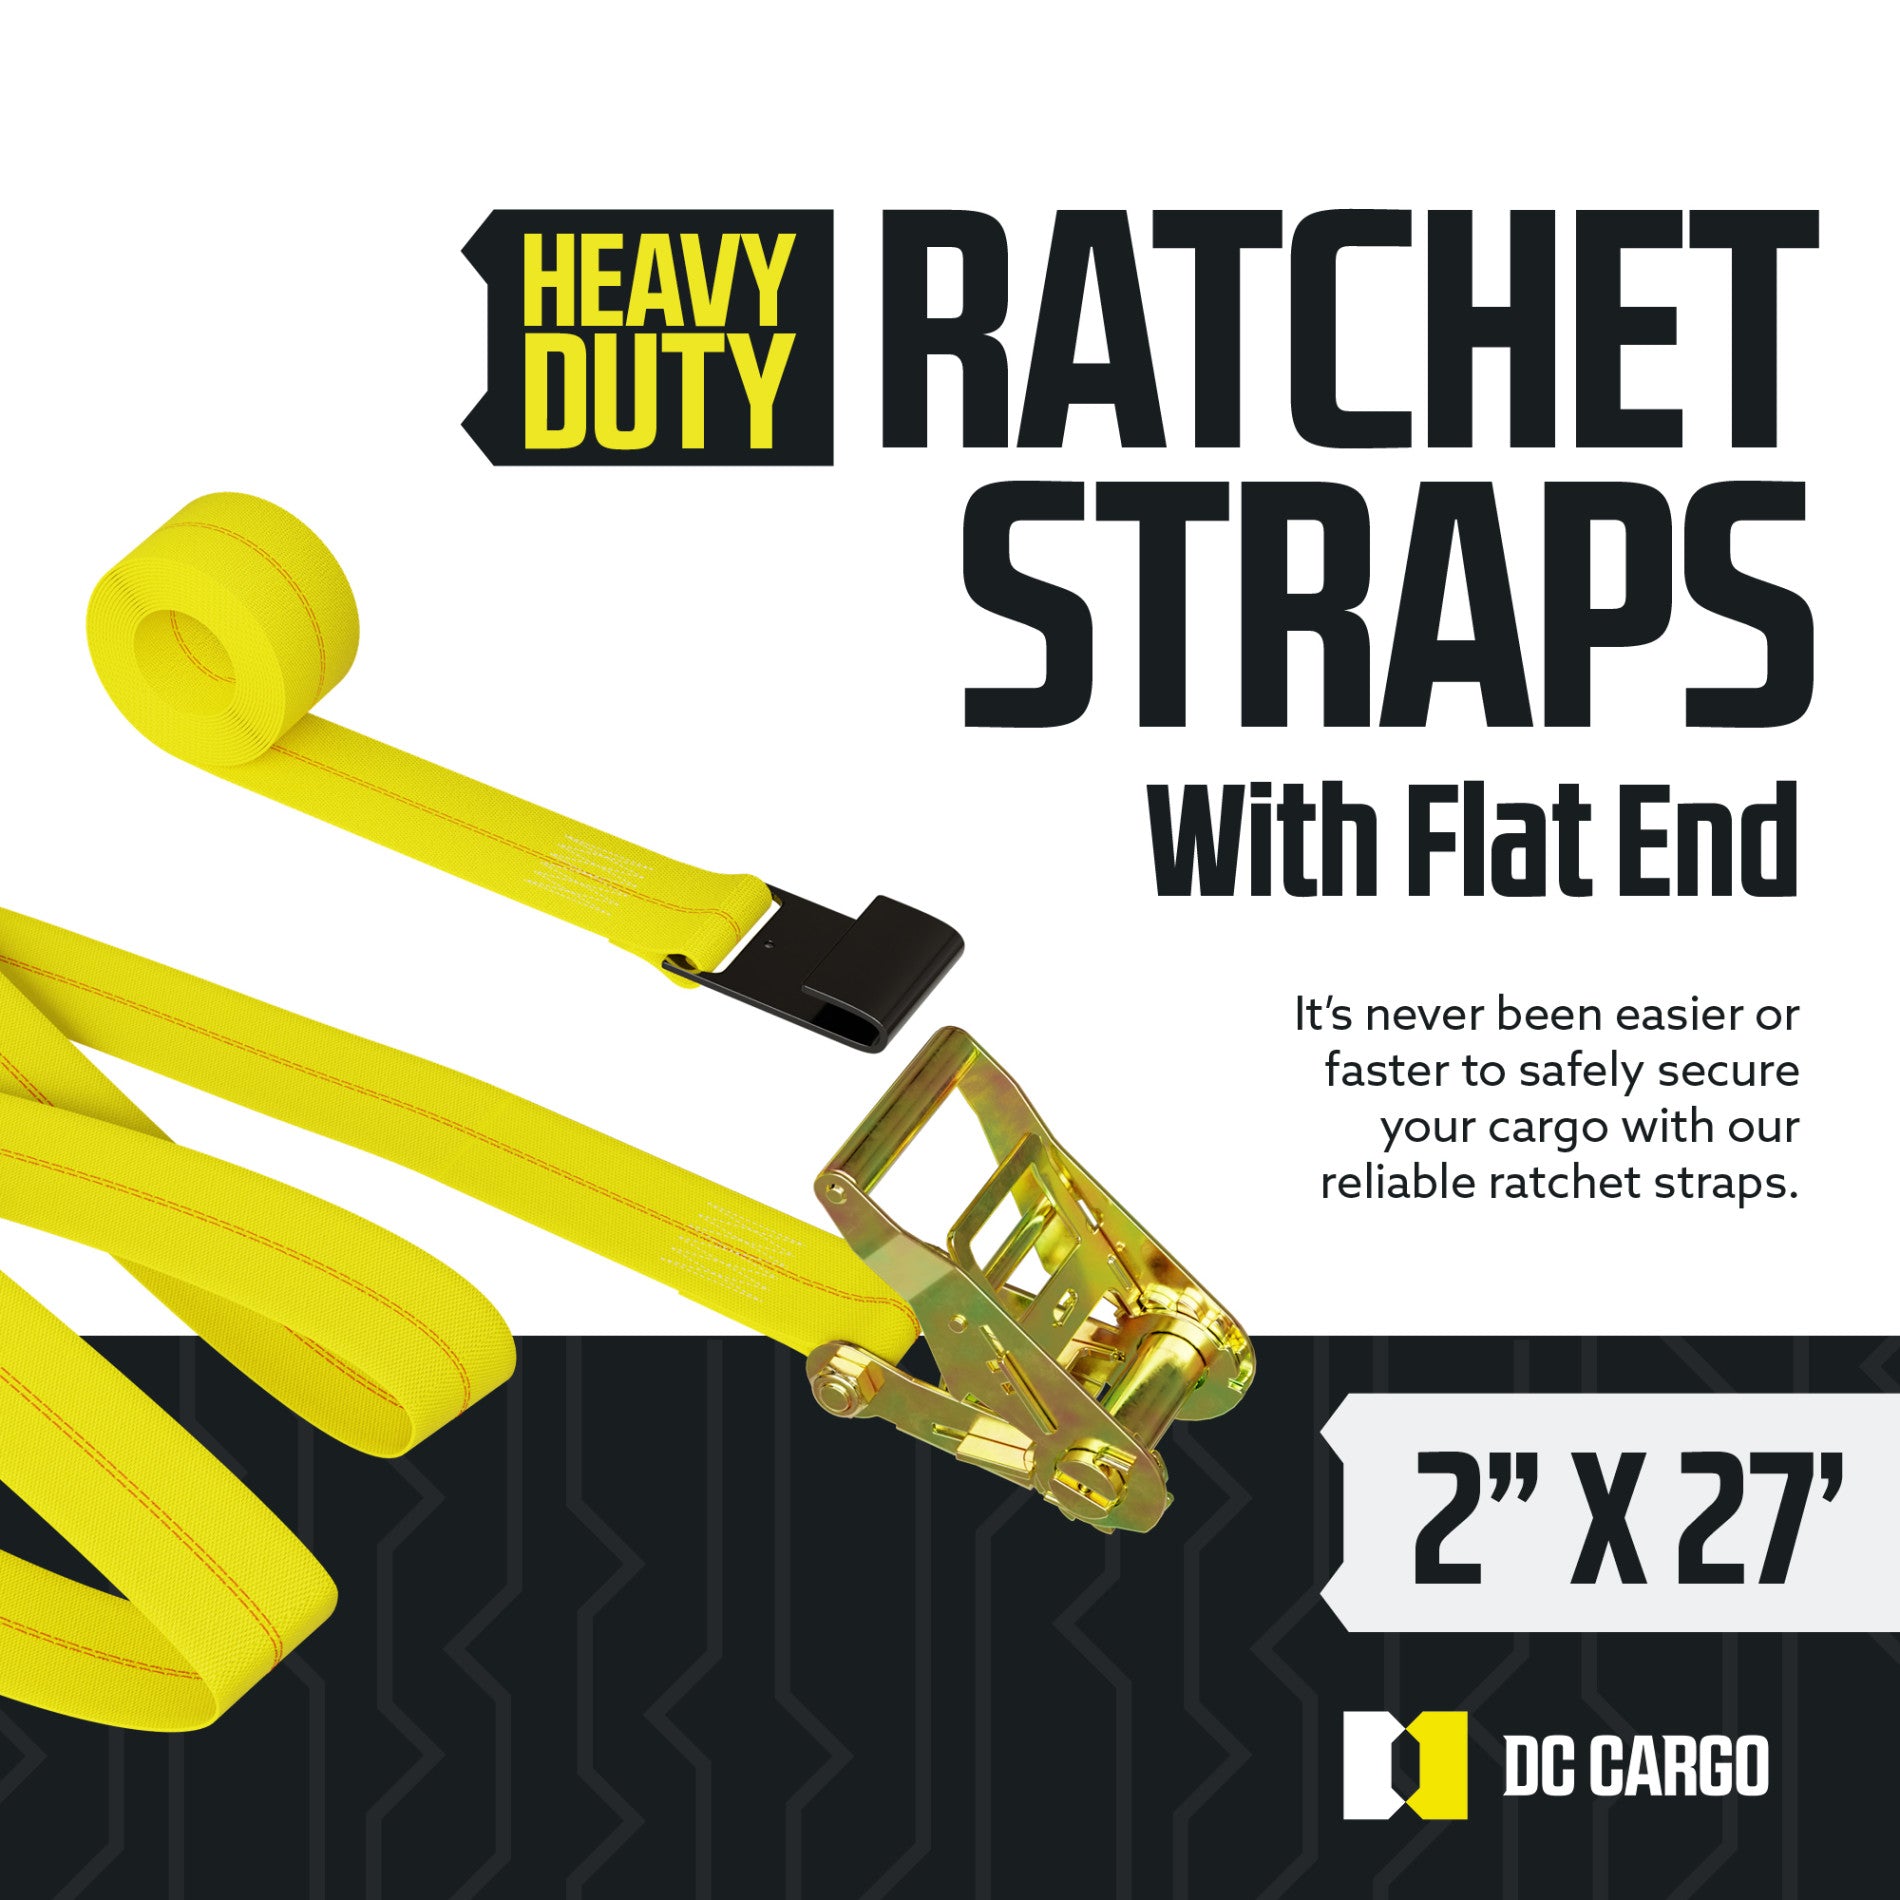 2 X 27' Ratchet Strap With Double J-hooks